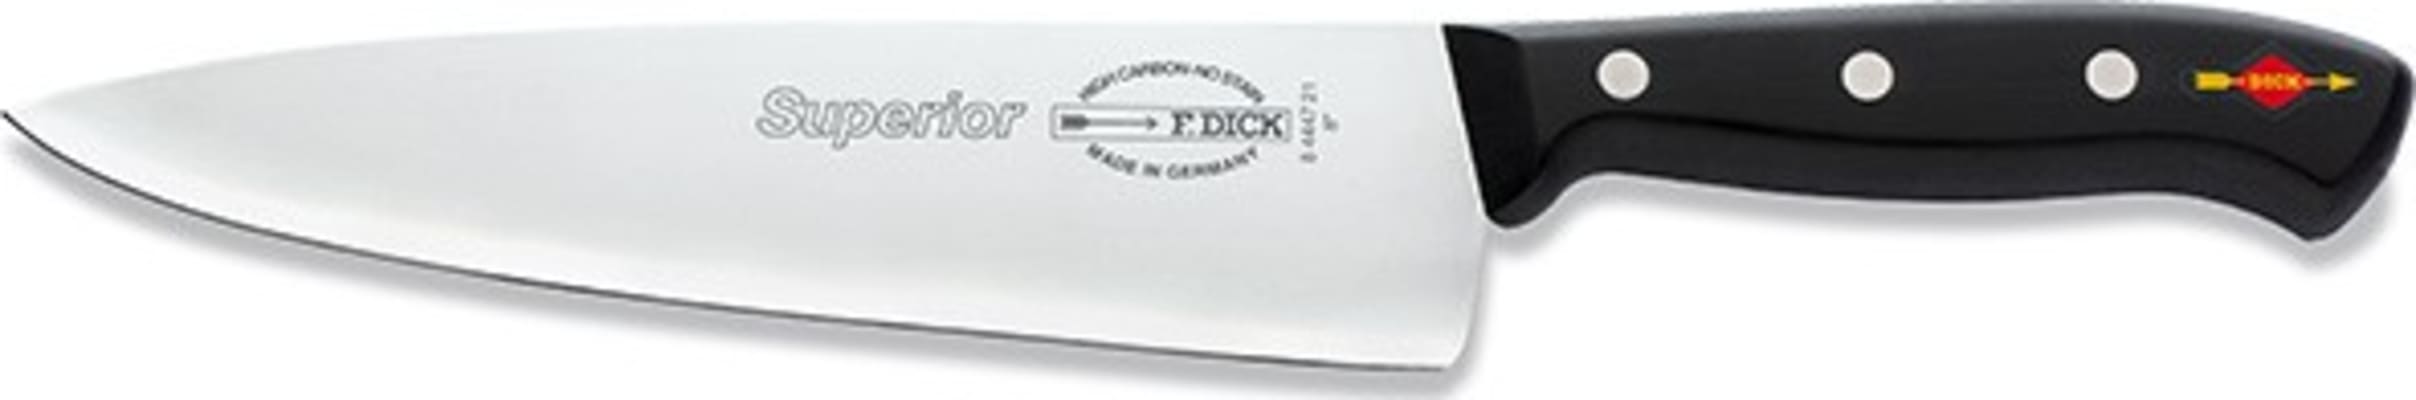 F. Dick Superior kokkahnífur 26 cm.